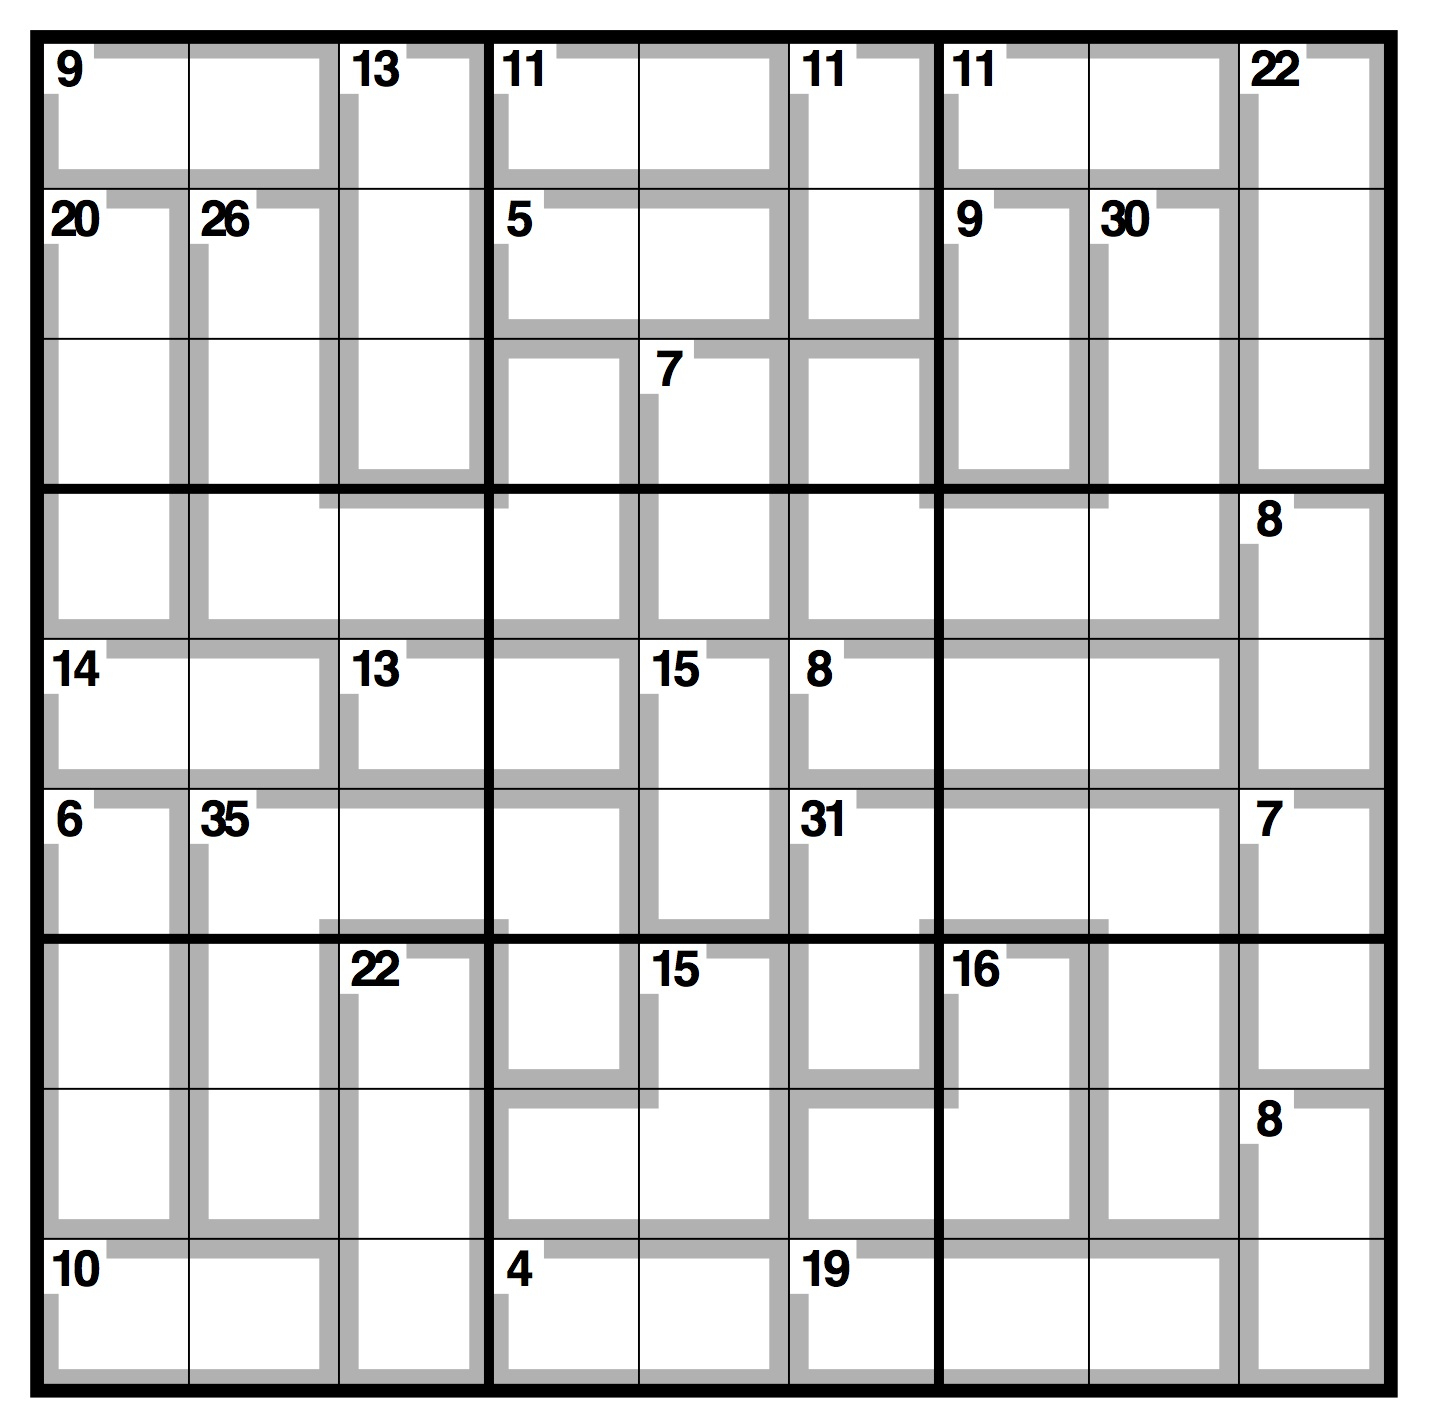 killer sudoku combinations pdf